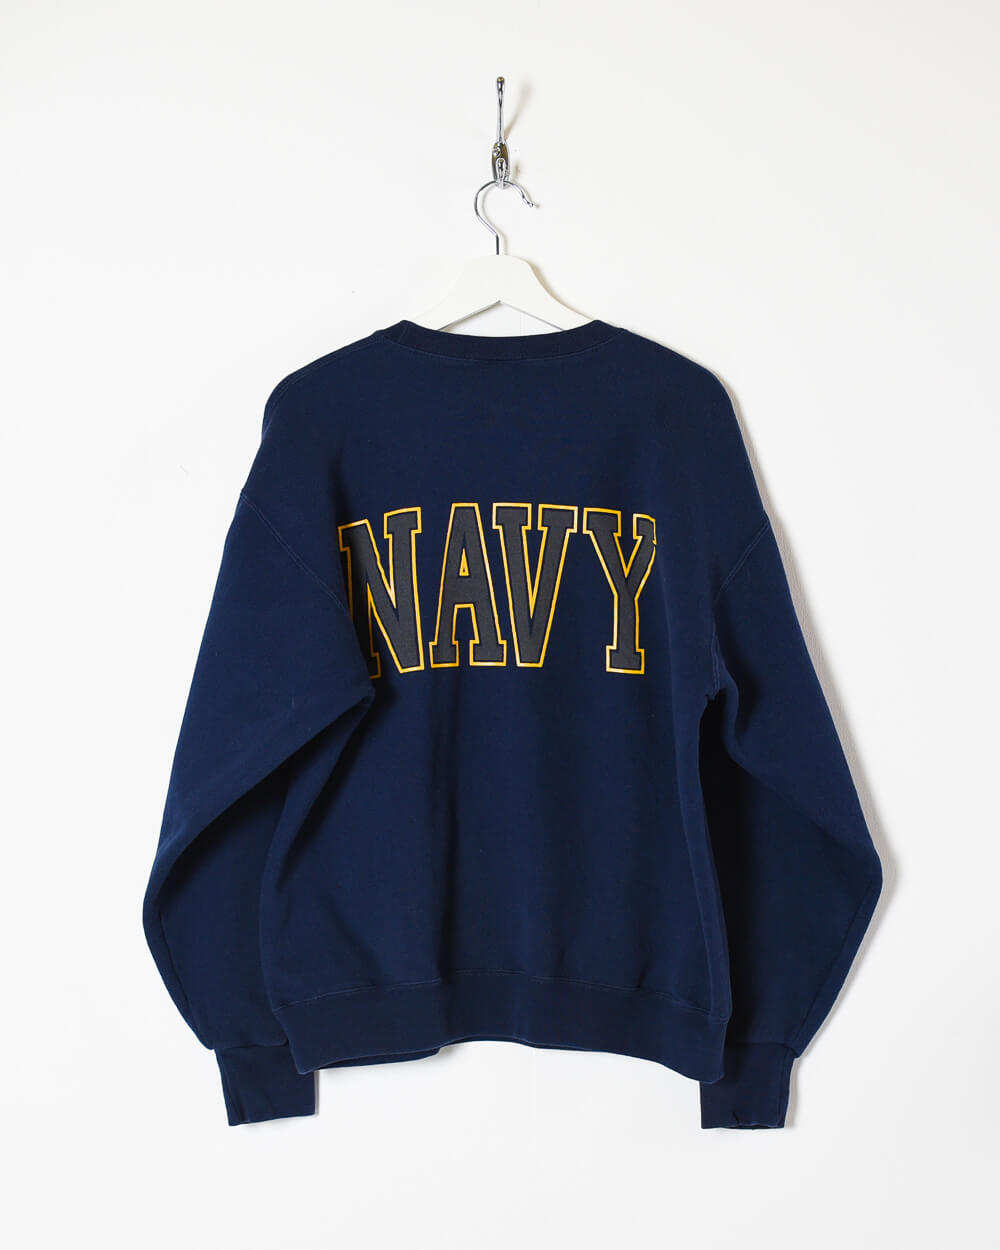 Navy United States Navy Sweatshirt - Medium